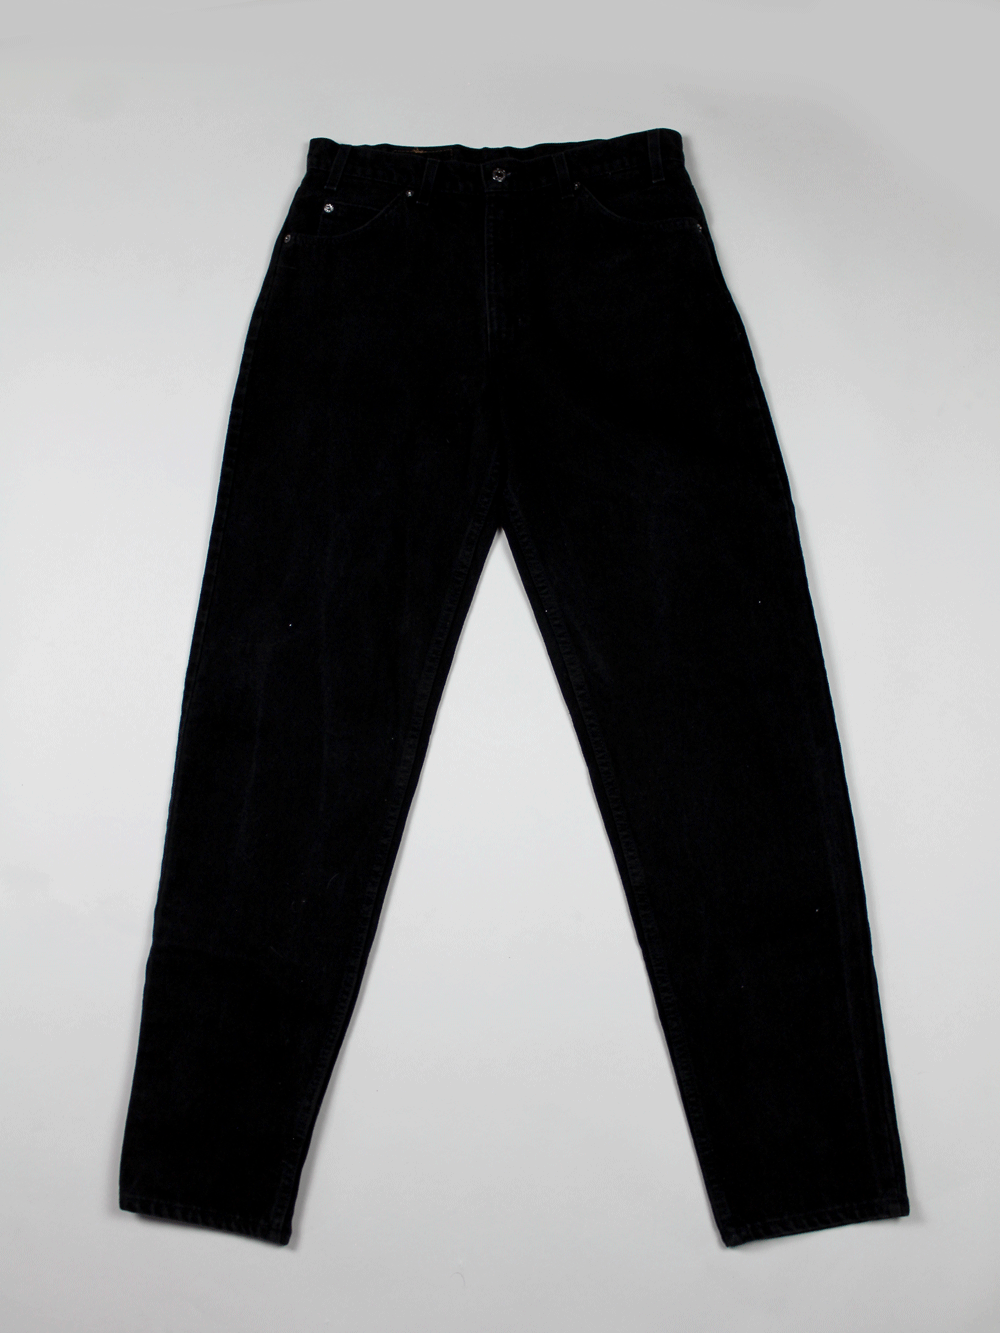 Levi's 550 Vintage Jeans (Orange Label)